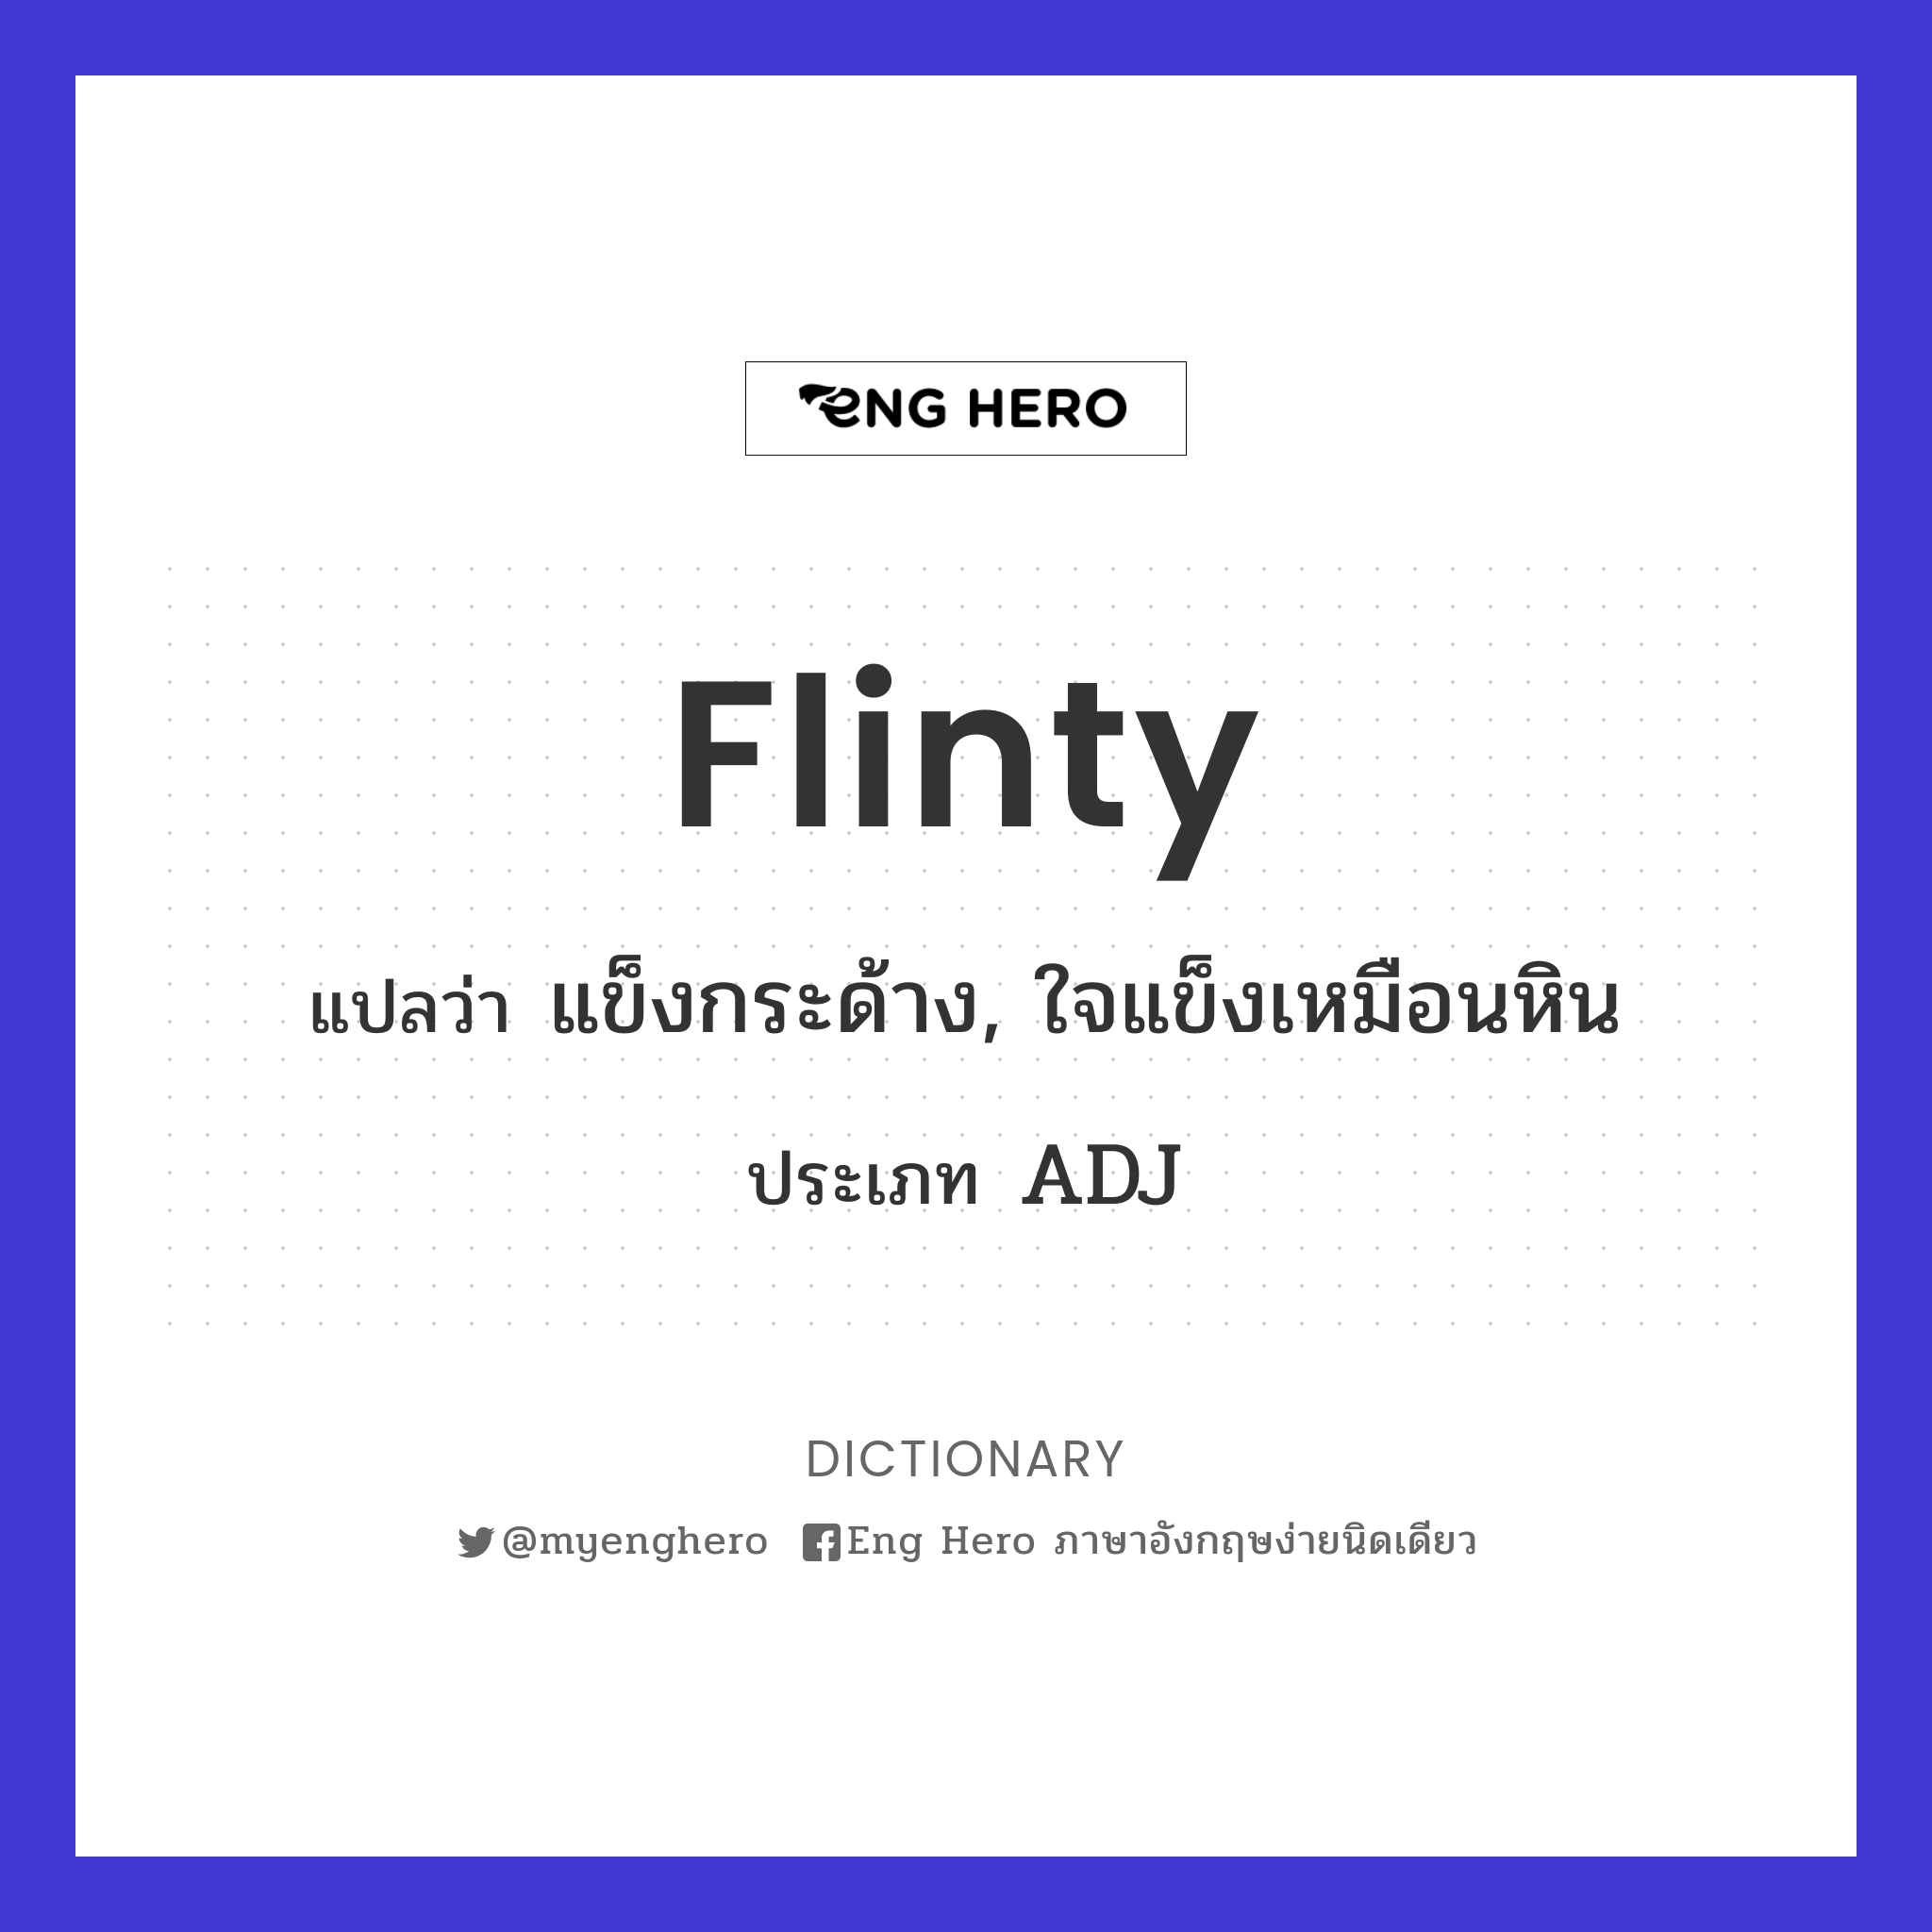 flinty